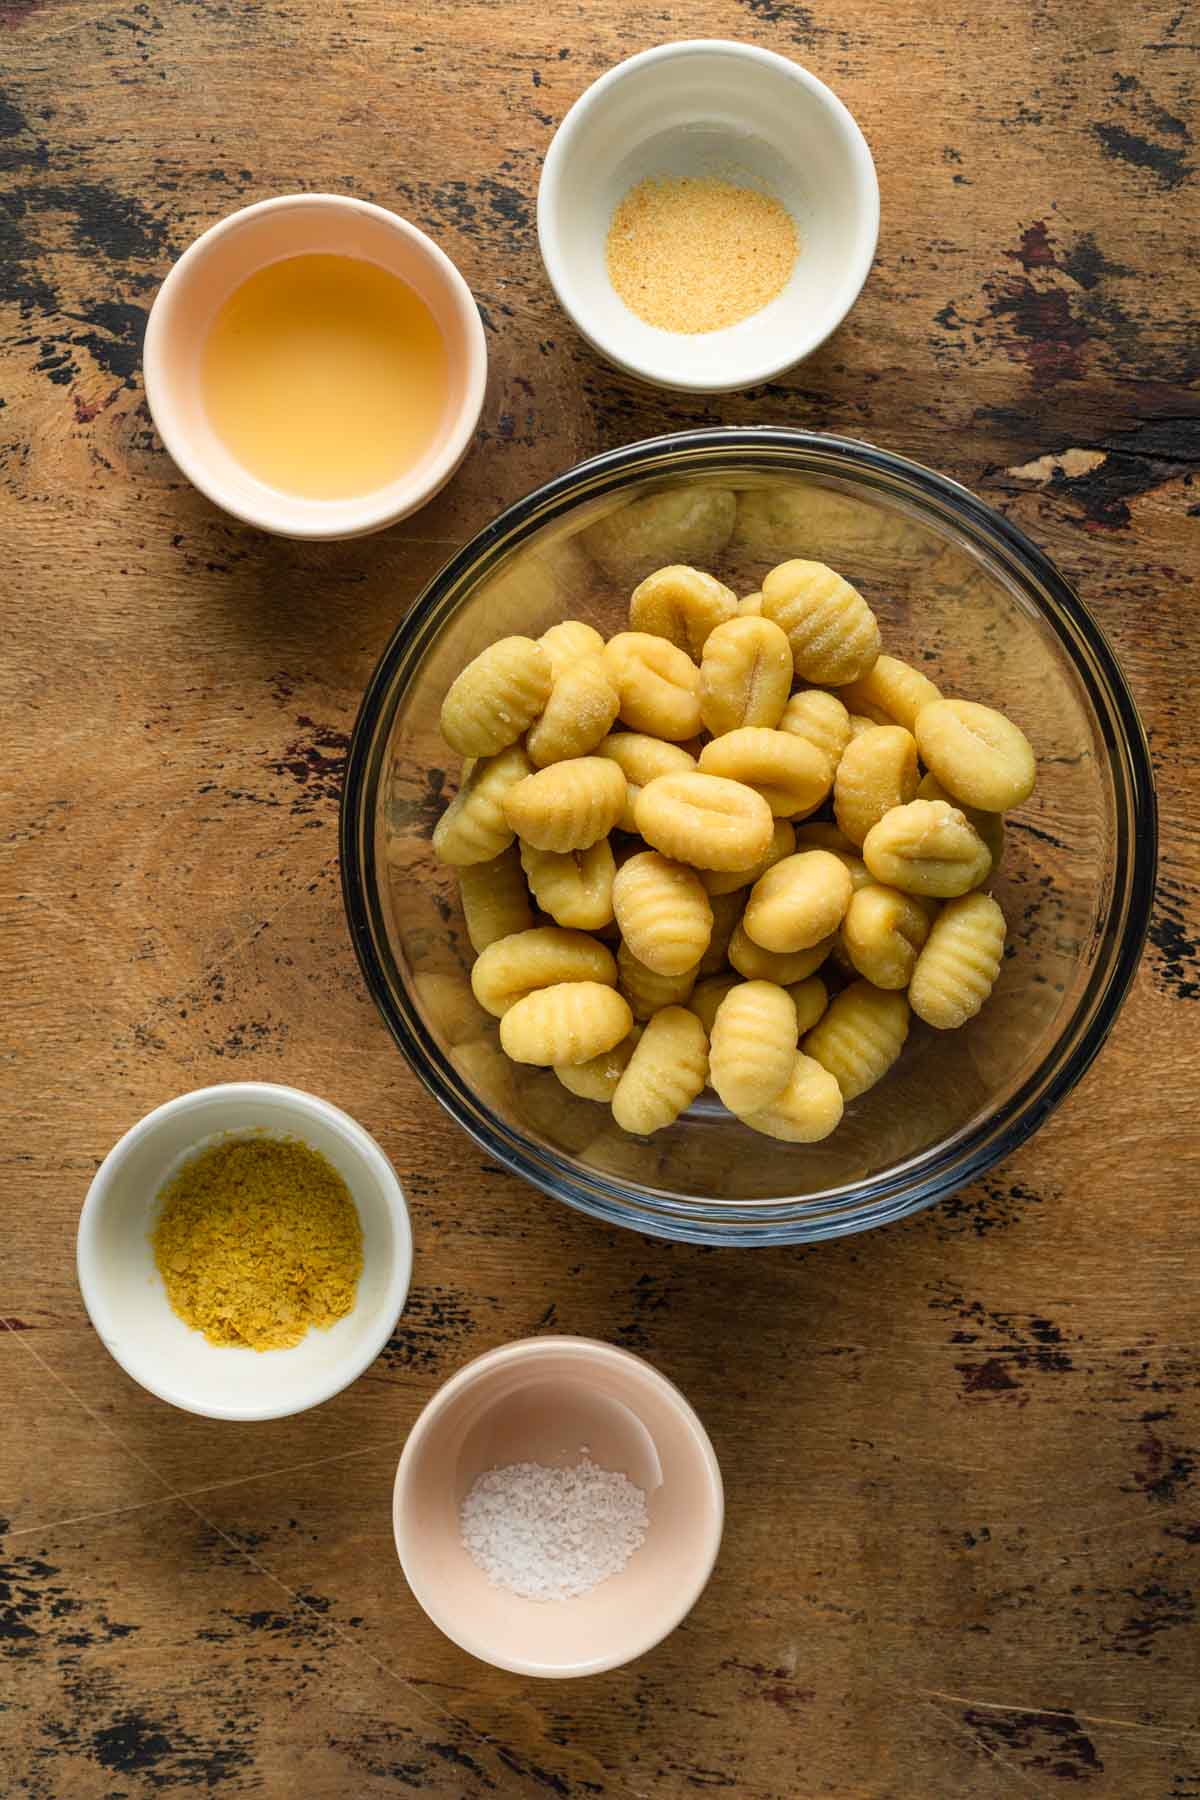 Ingredients to make air fryer gnocchi arranged in individual bowls.